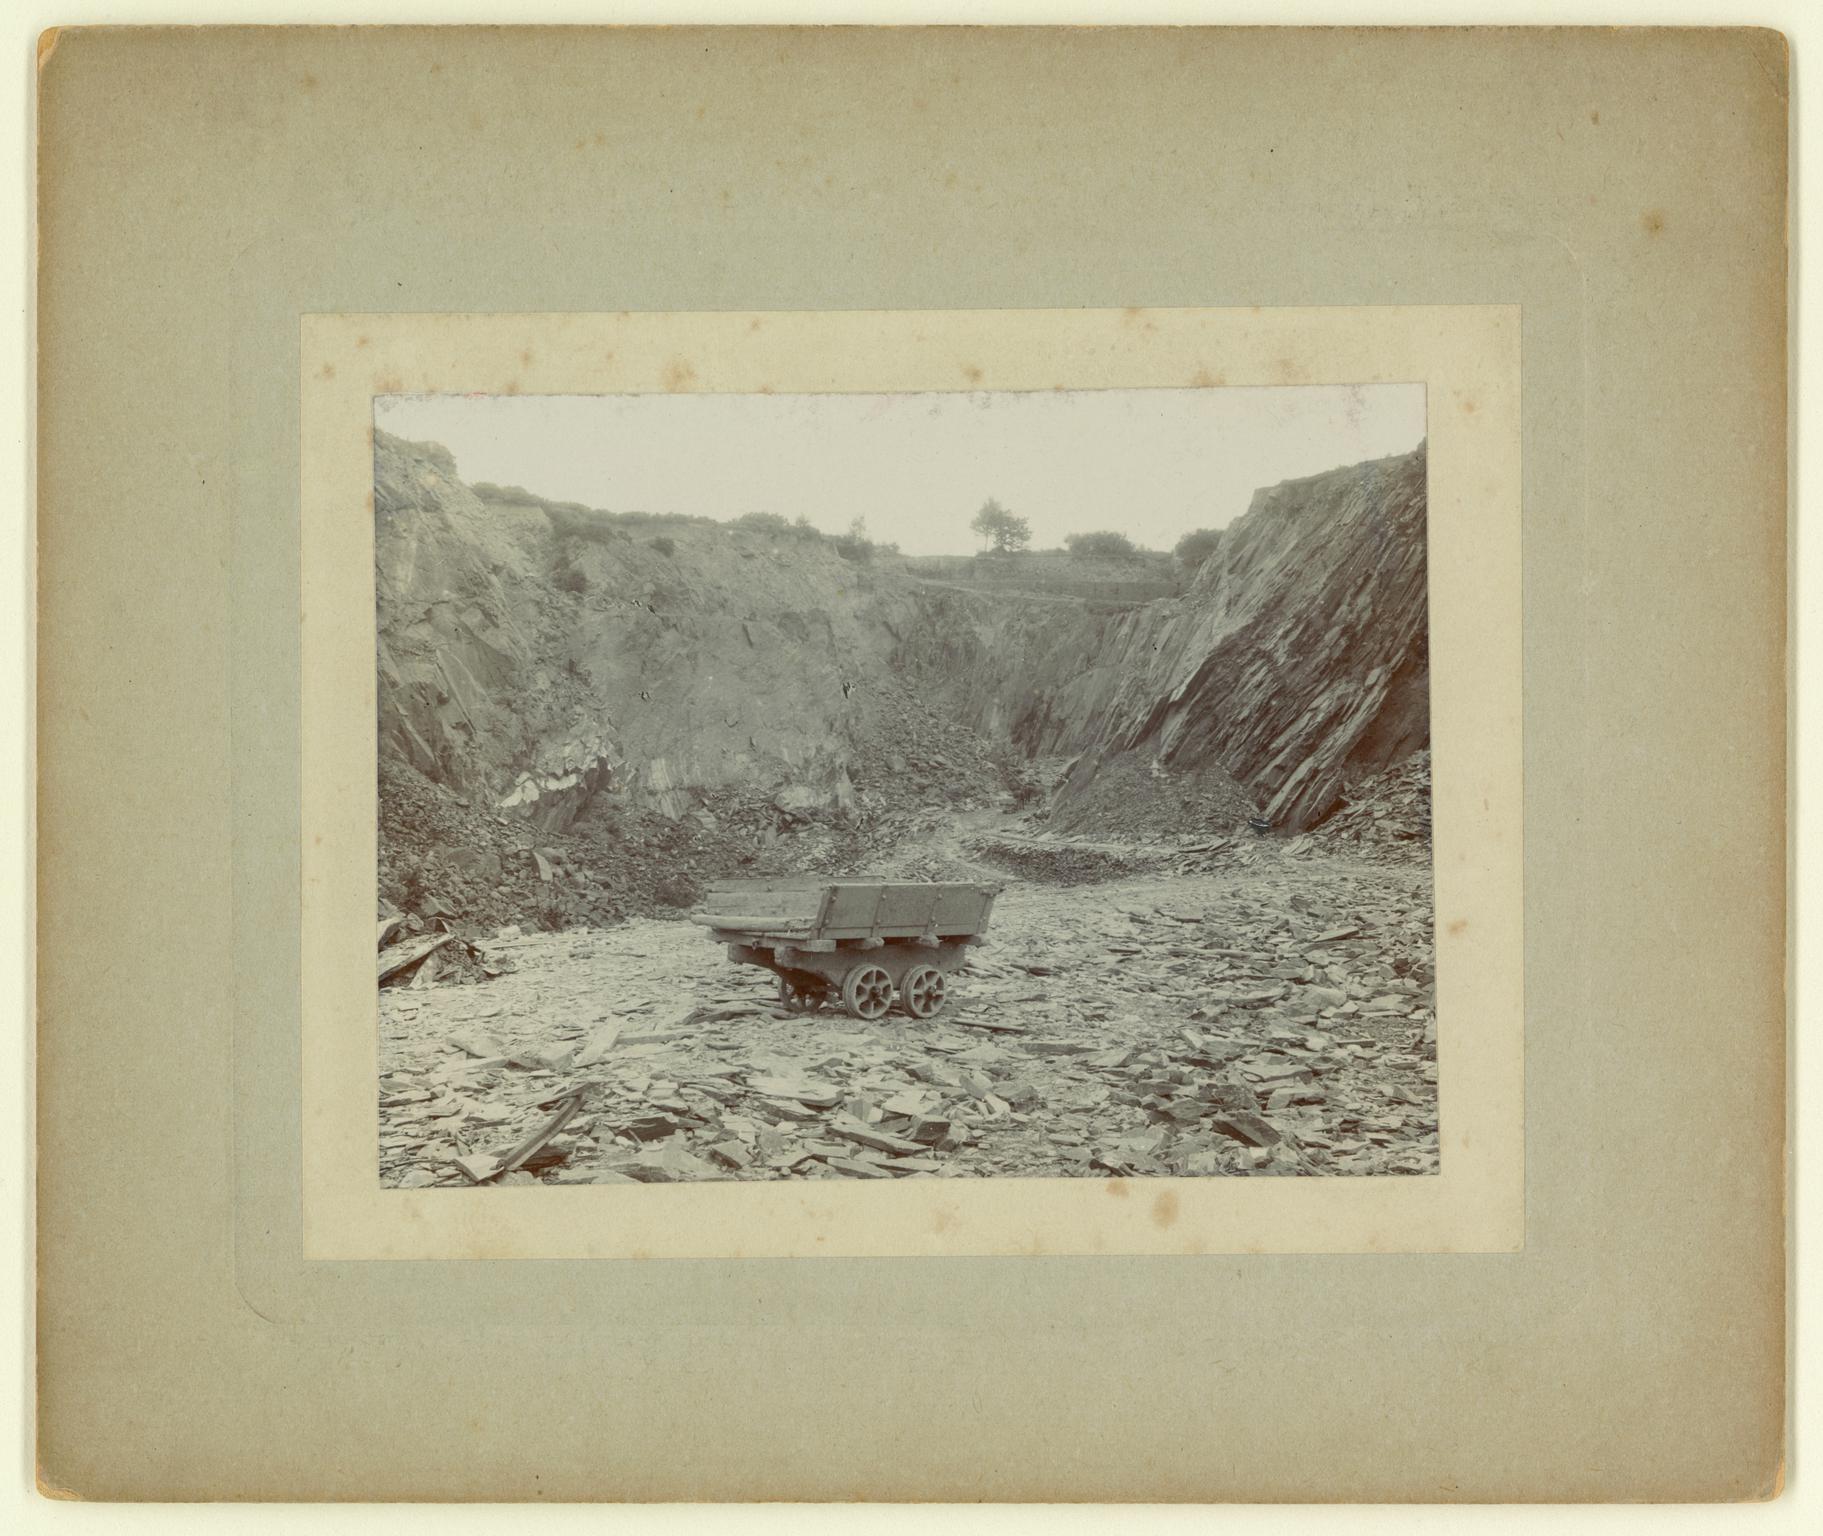 Gilfach slate quarry, photograph